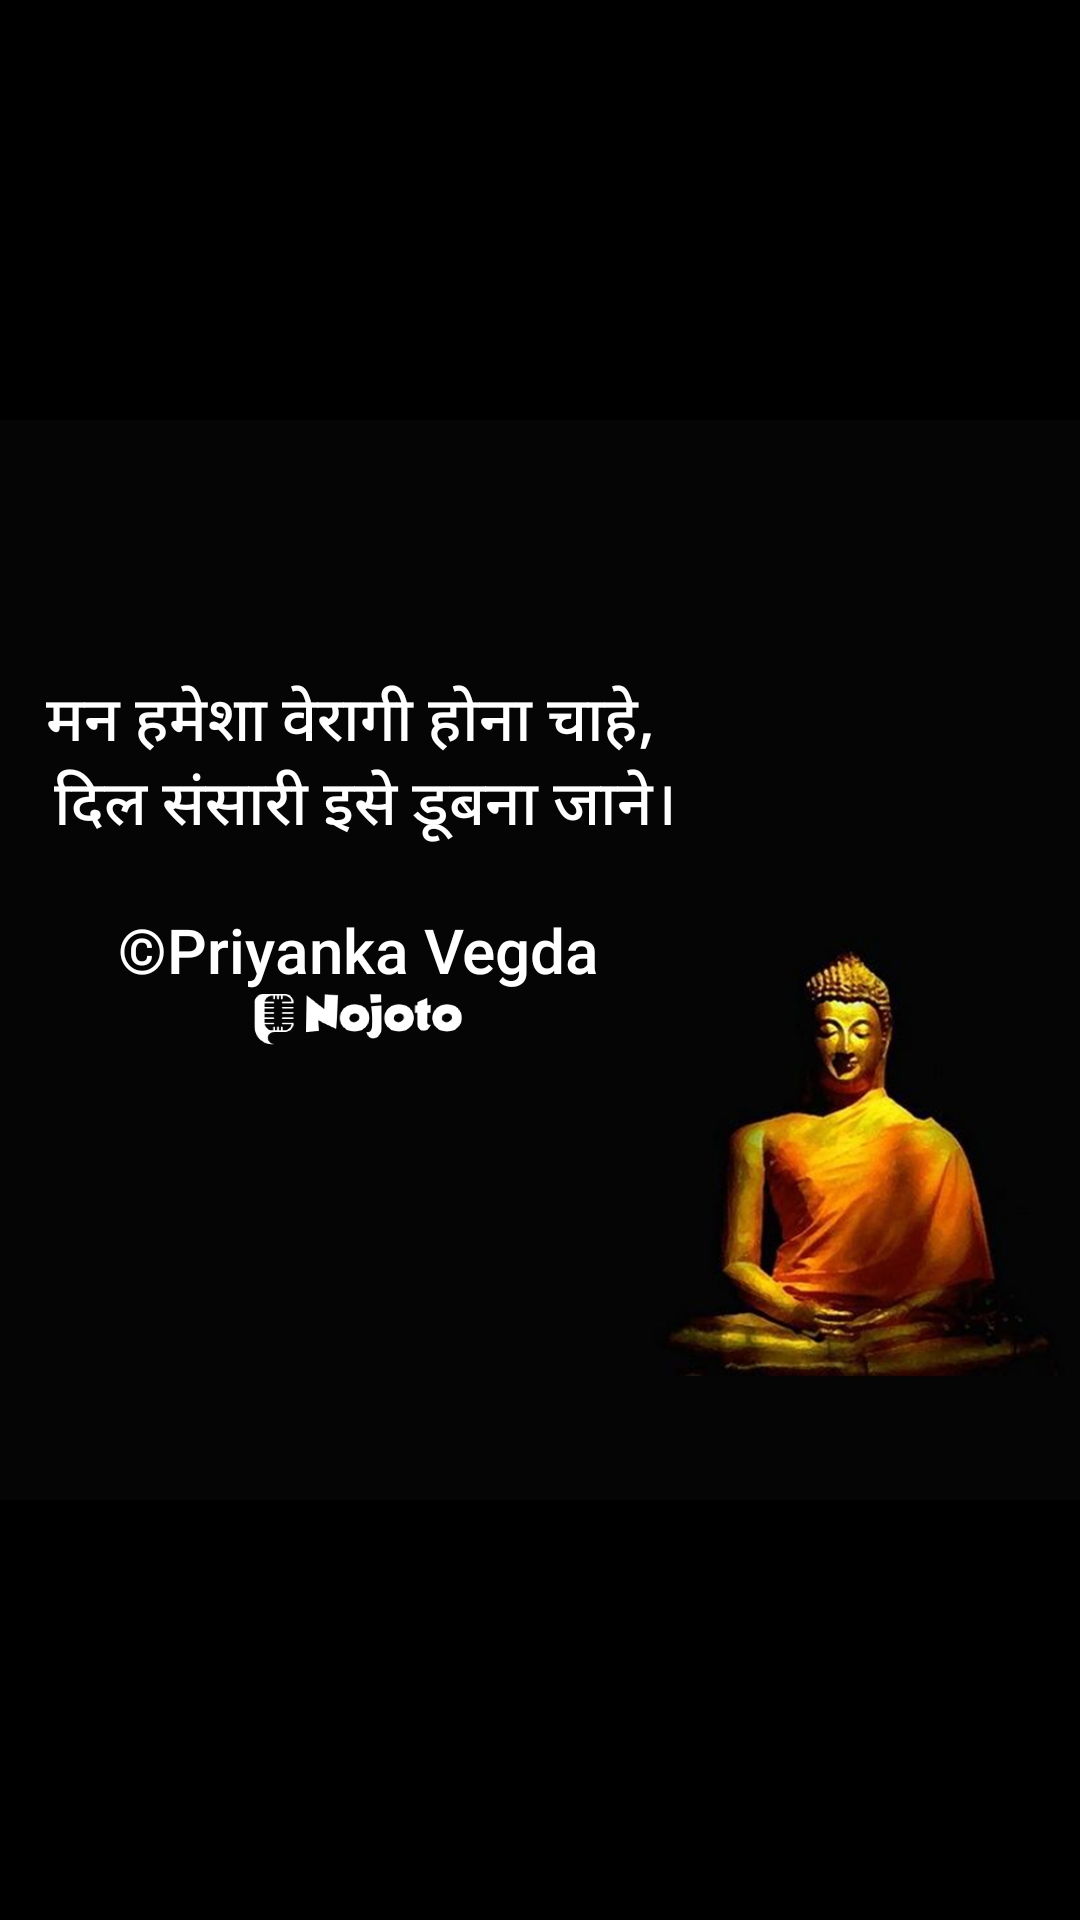 #Hindi #Shayar #shayri #spiritual #peace #Mind #Quote #nojohindi #Nojoto 🧿❤

#Buddha